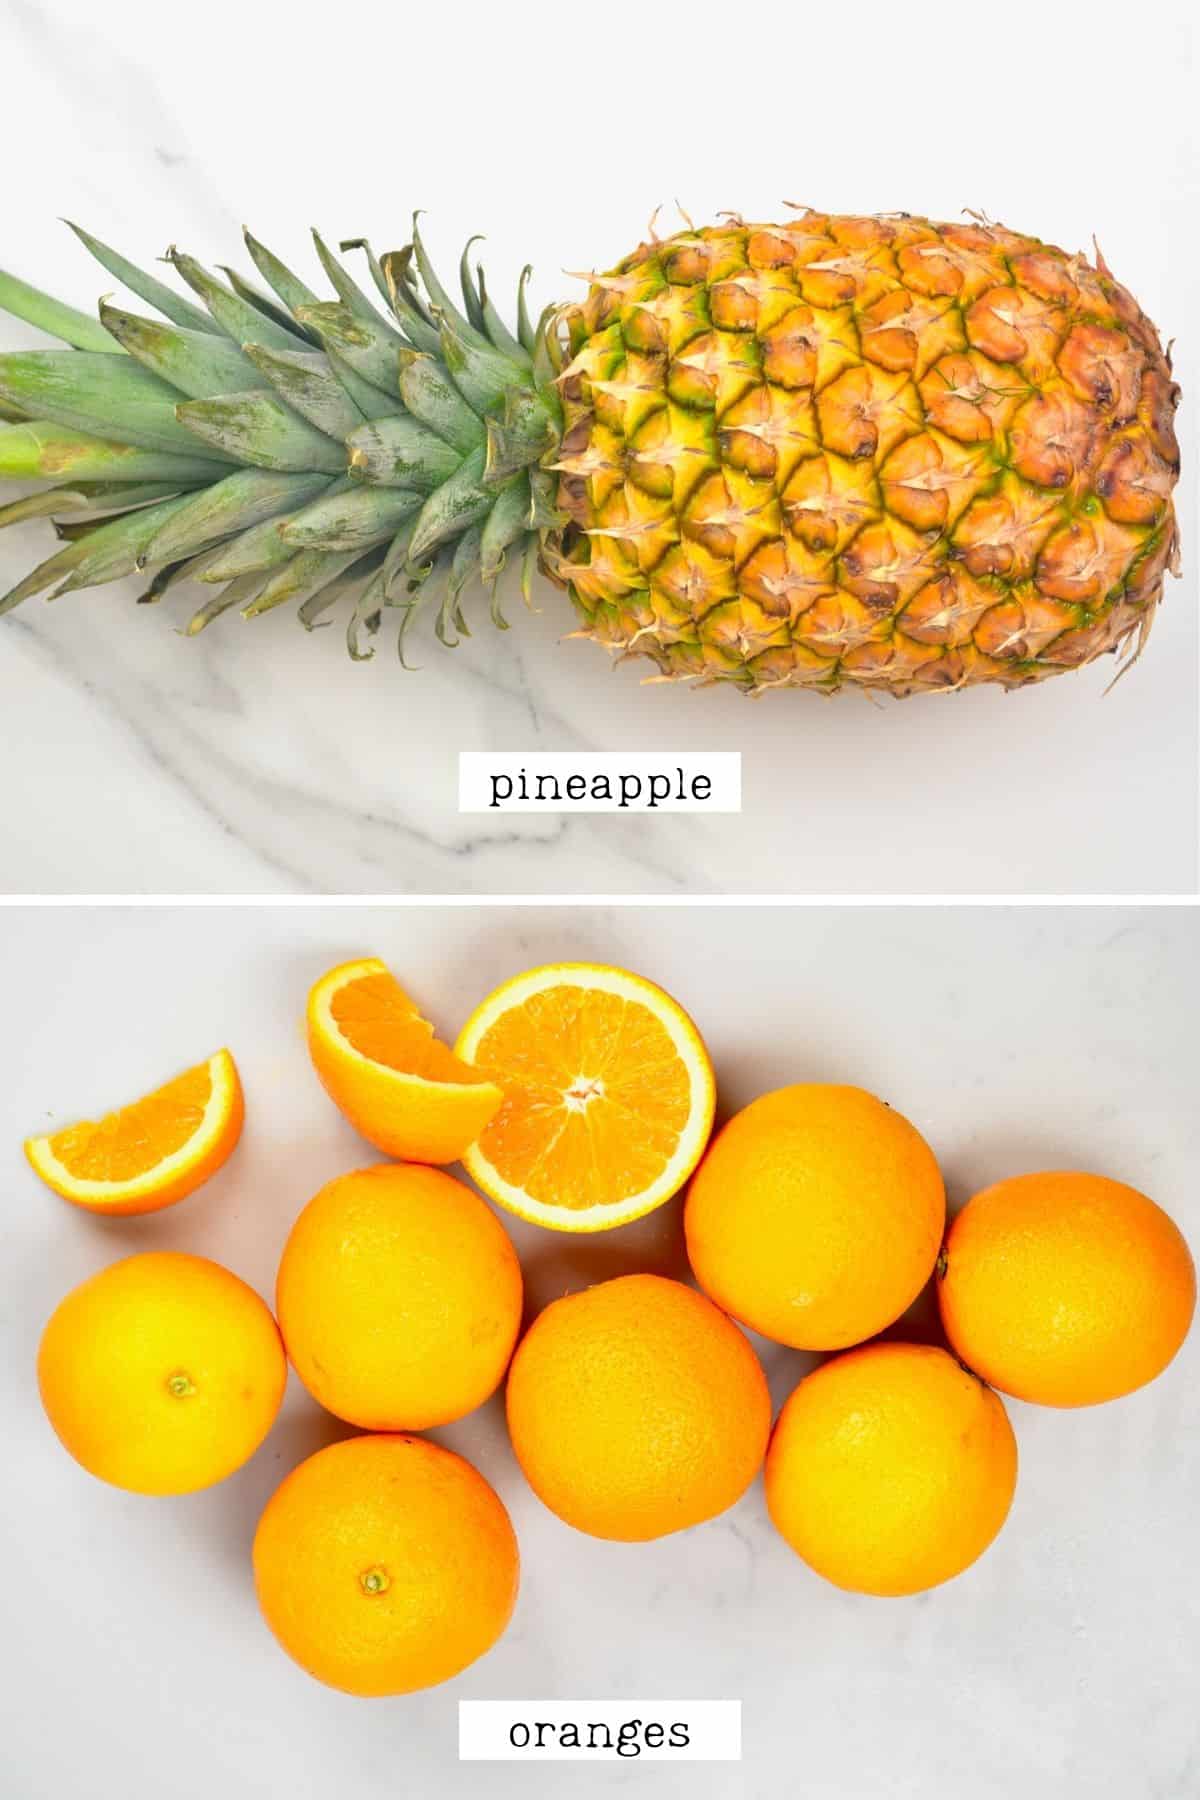 Ingredients for pineapple orange juice